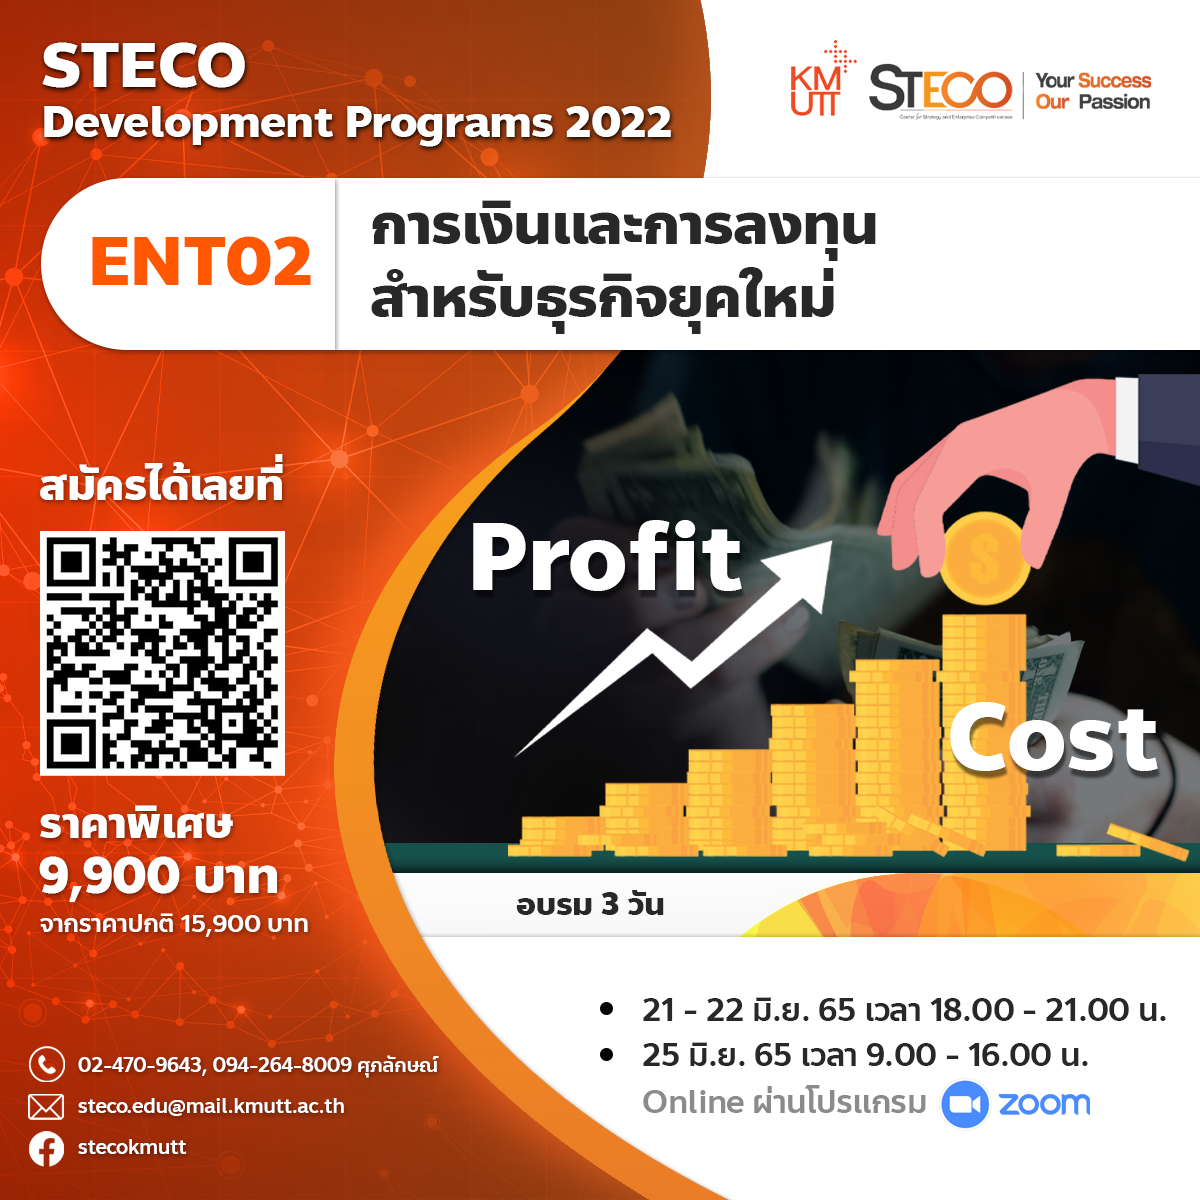 ENT02: Financial Management and Investment for Modern Enterprise